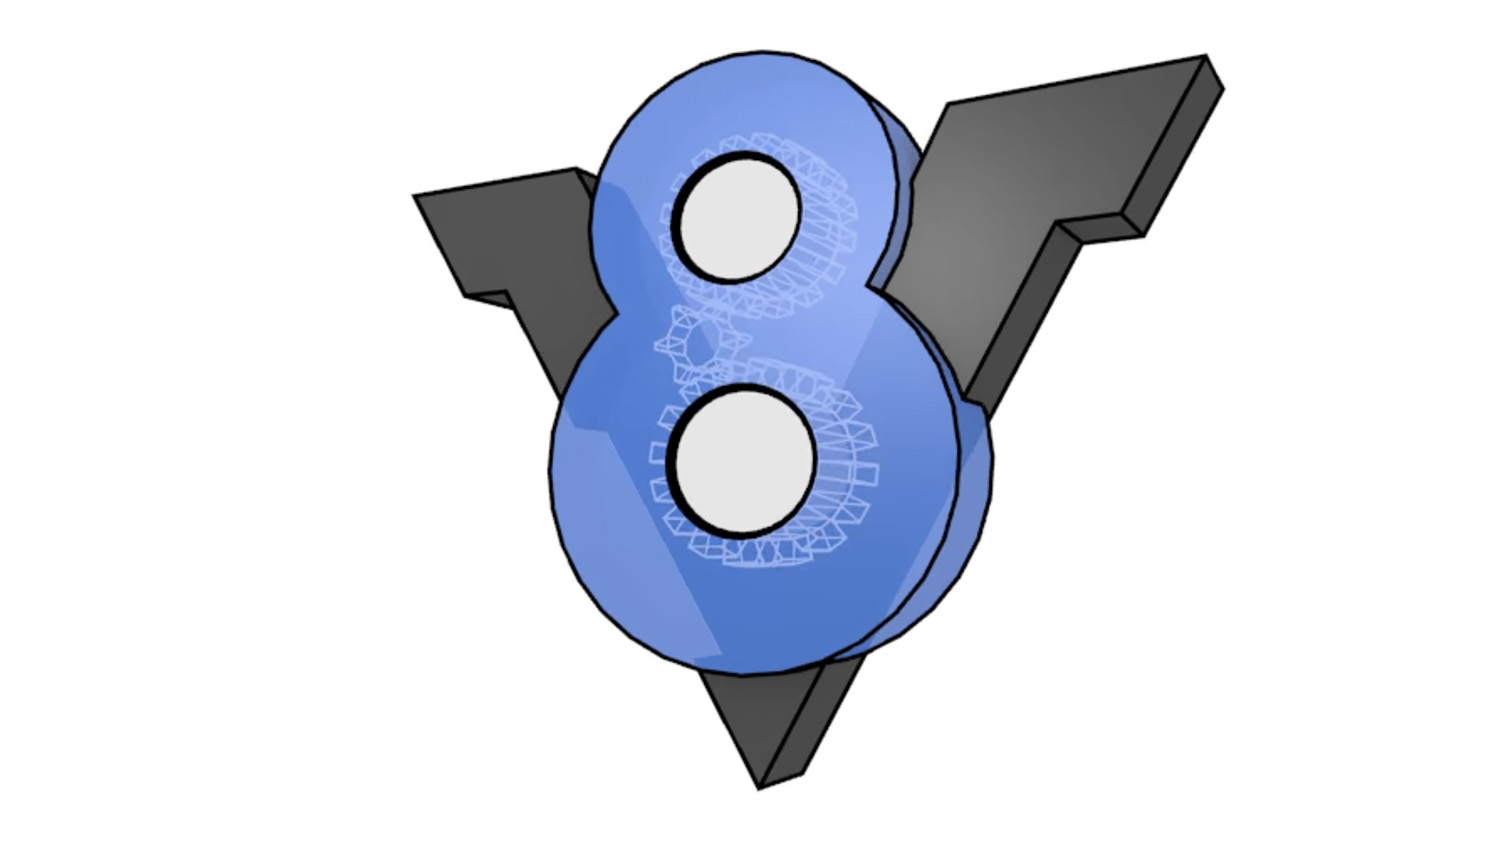 visible v8 logo